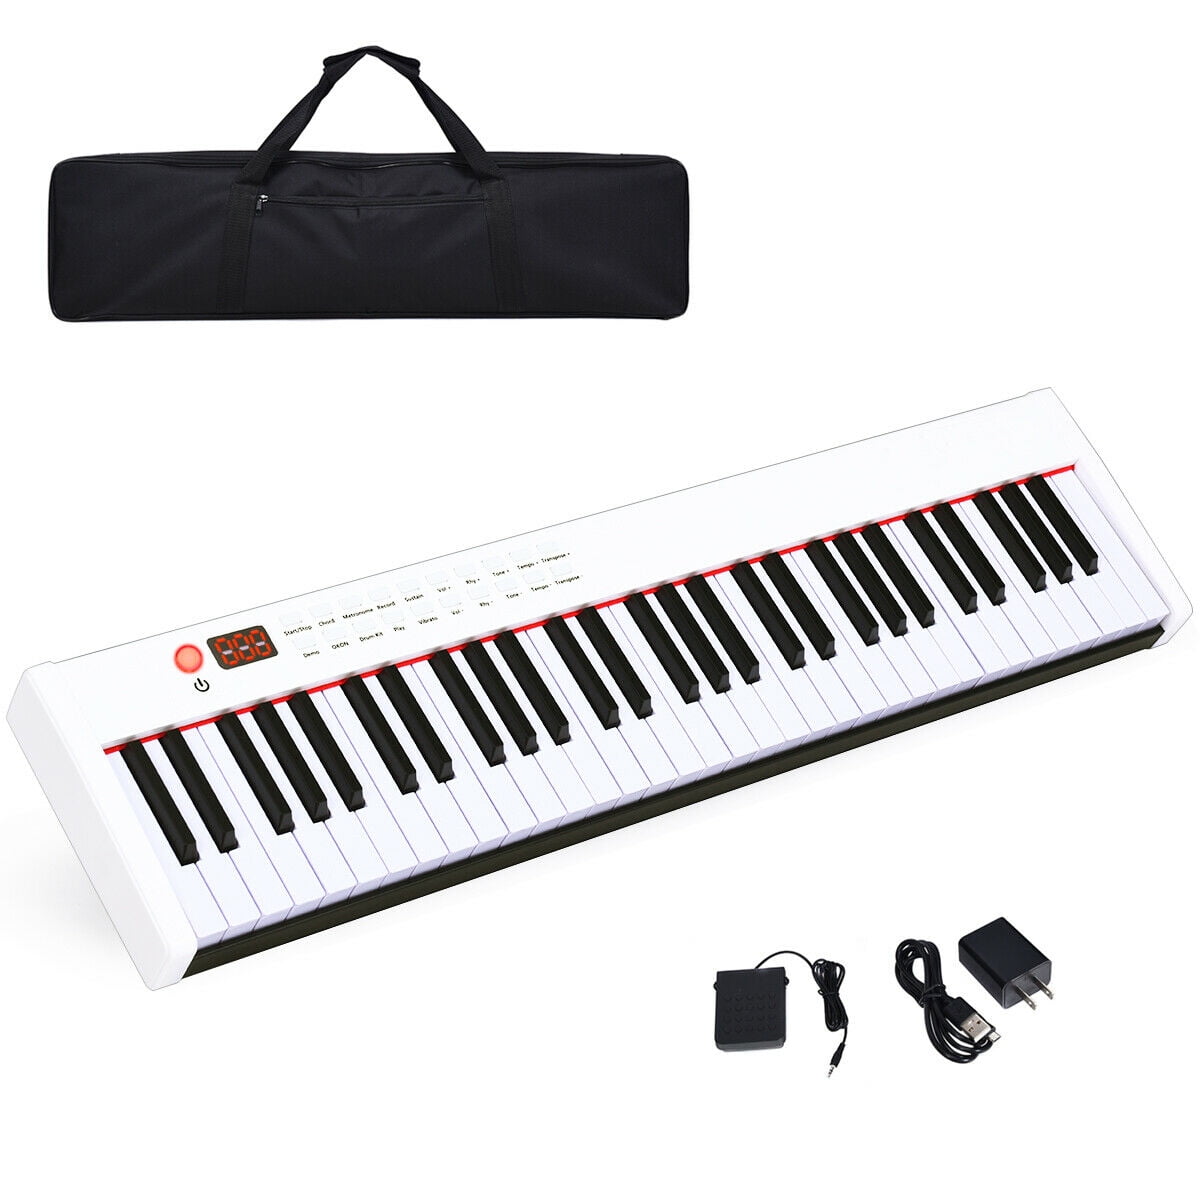 Piano Keyboard 88 Key Electric Piano MIDI Musical Instruments